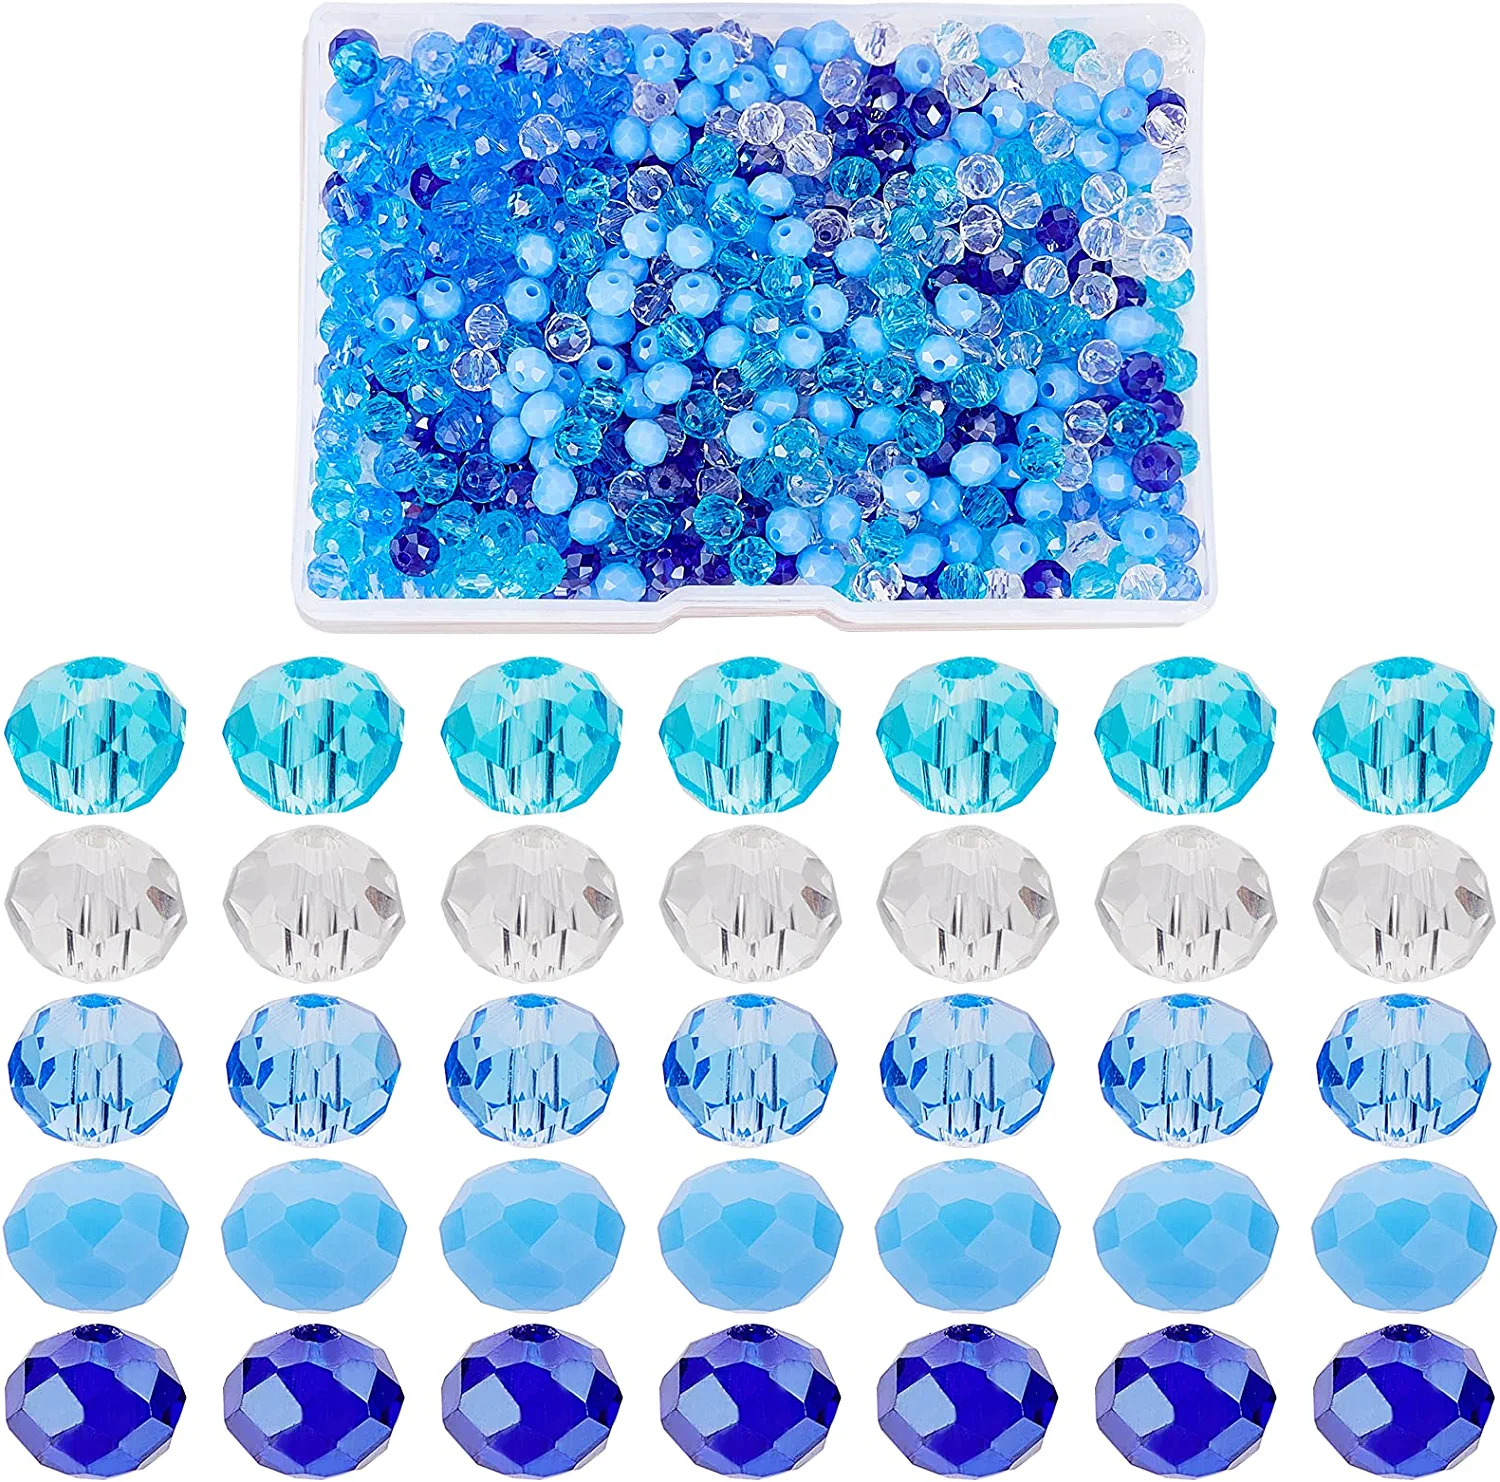 Beebeecraft idea on making blue crystal glass bead necklace 